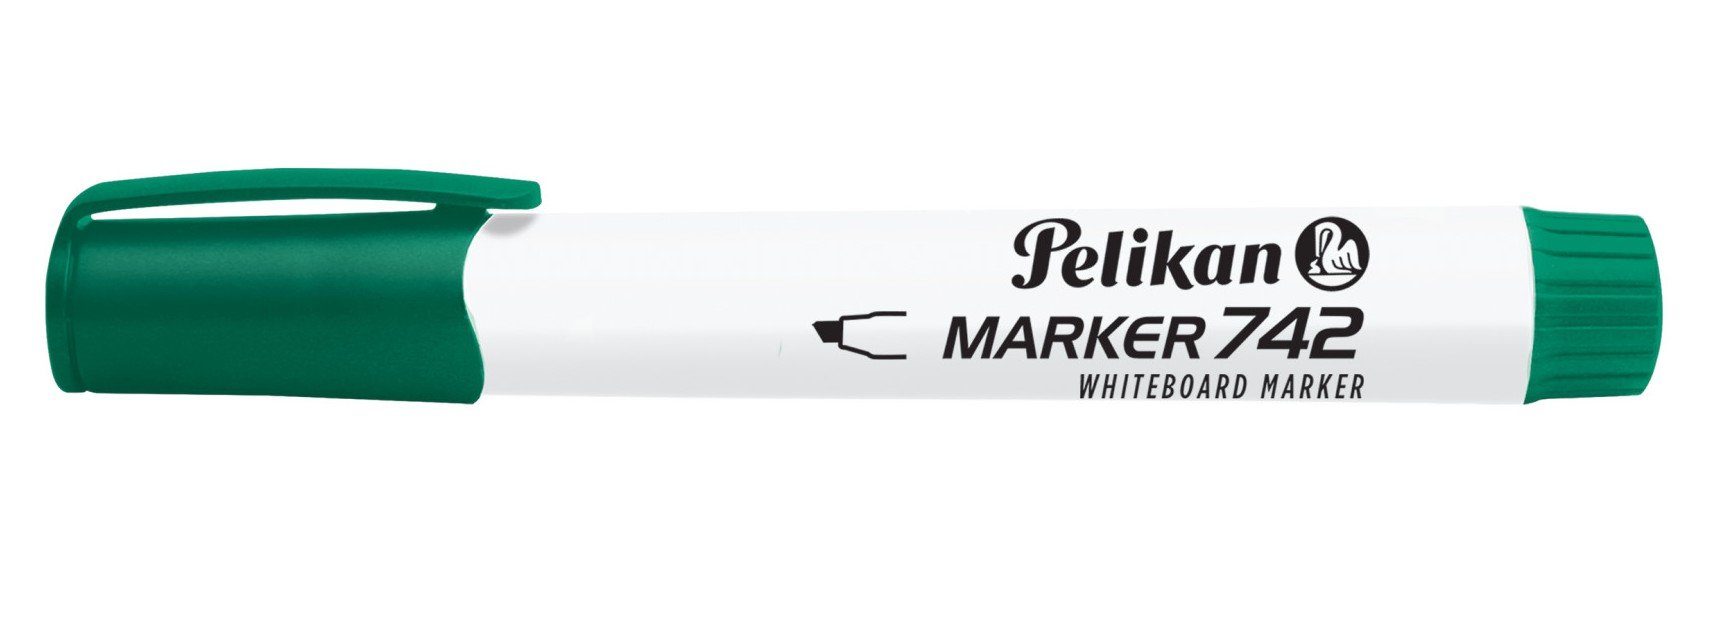 Marker Pelikan Marker 742 Whiteboard grün Pelikan